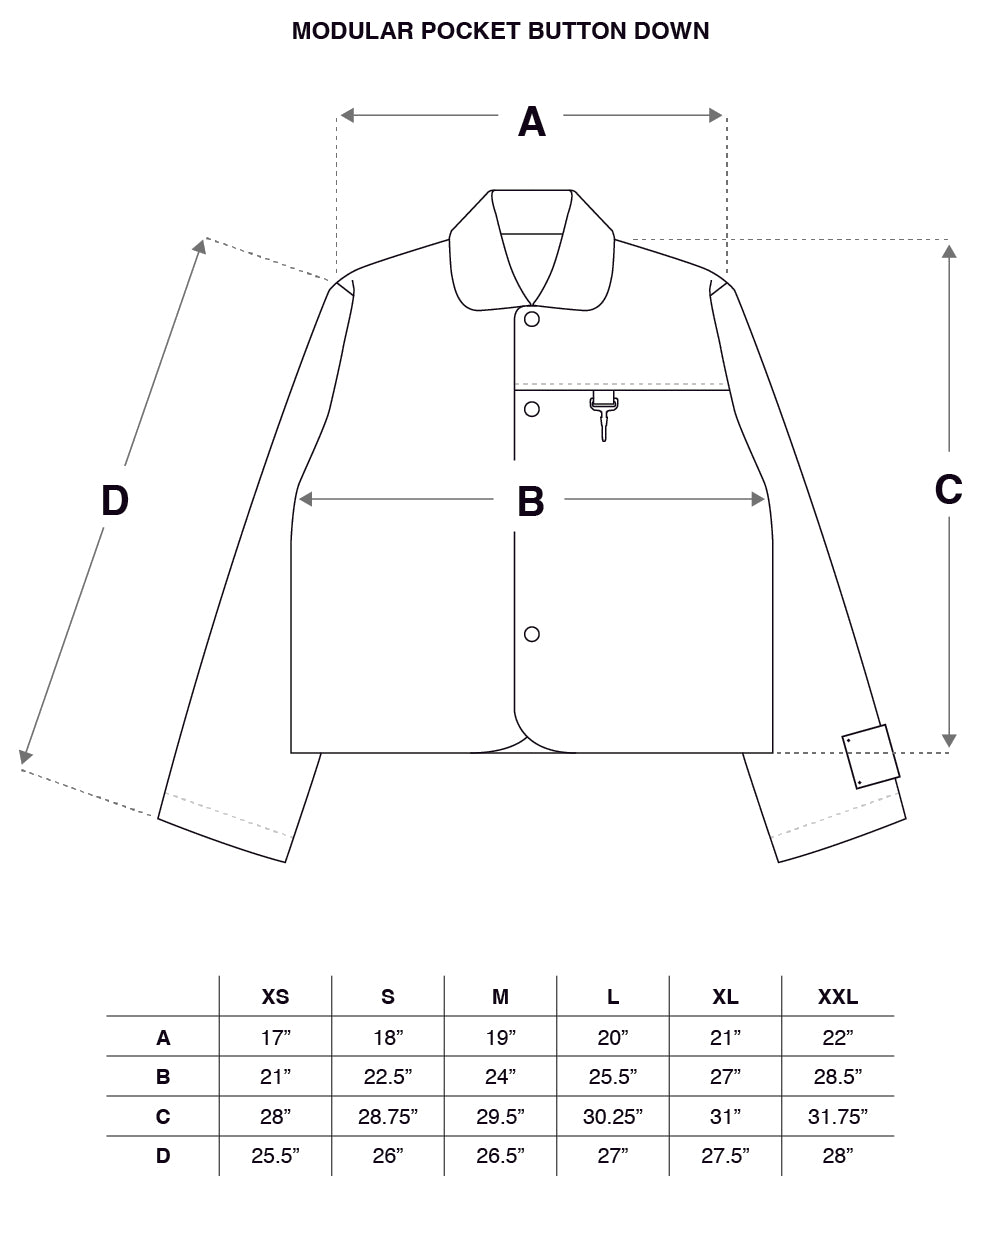 Modular Pocket Cotton Ripstop Button Down Shirt in Black Size Guide